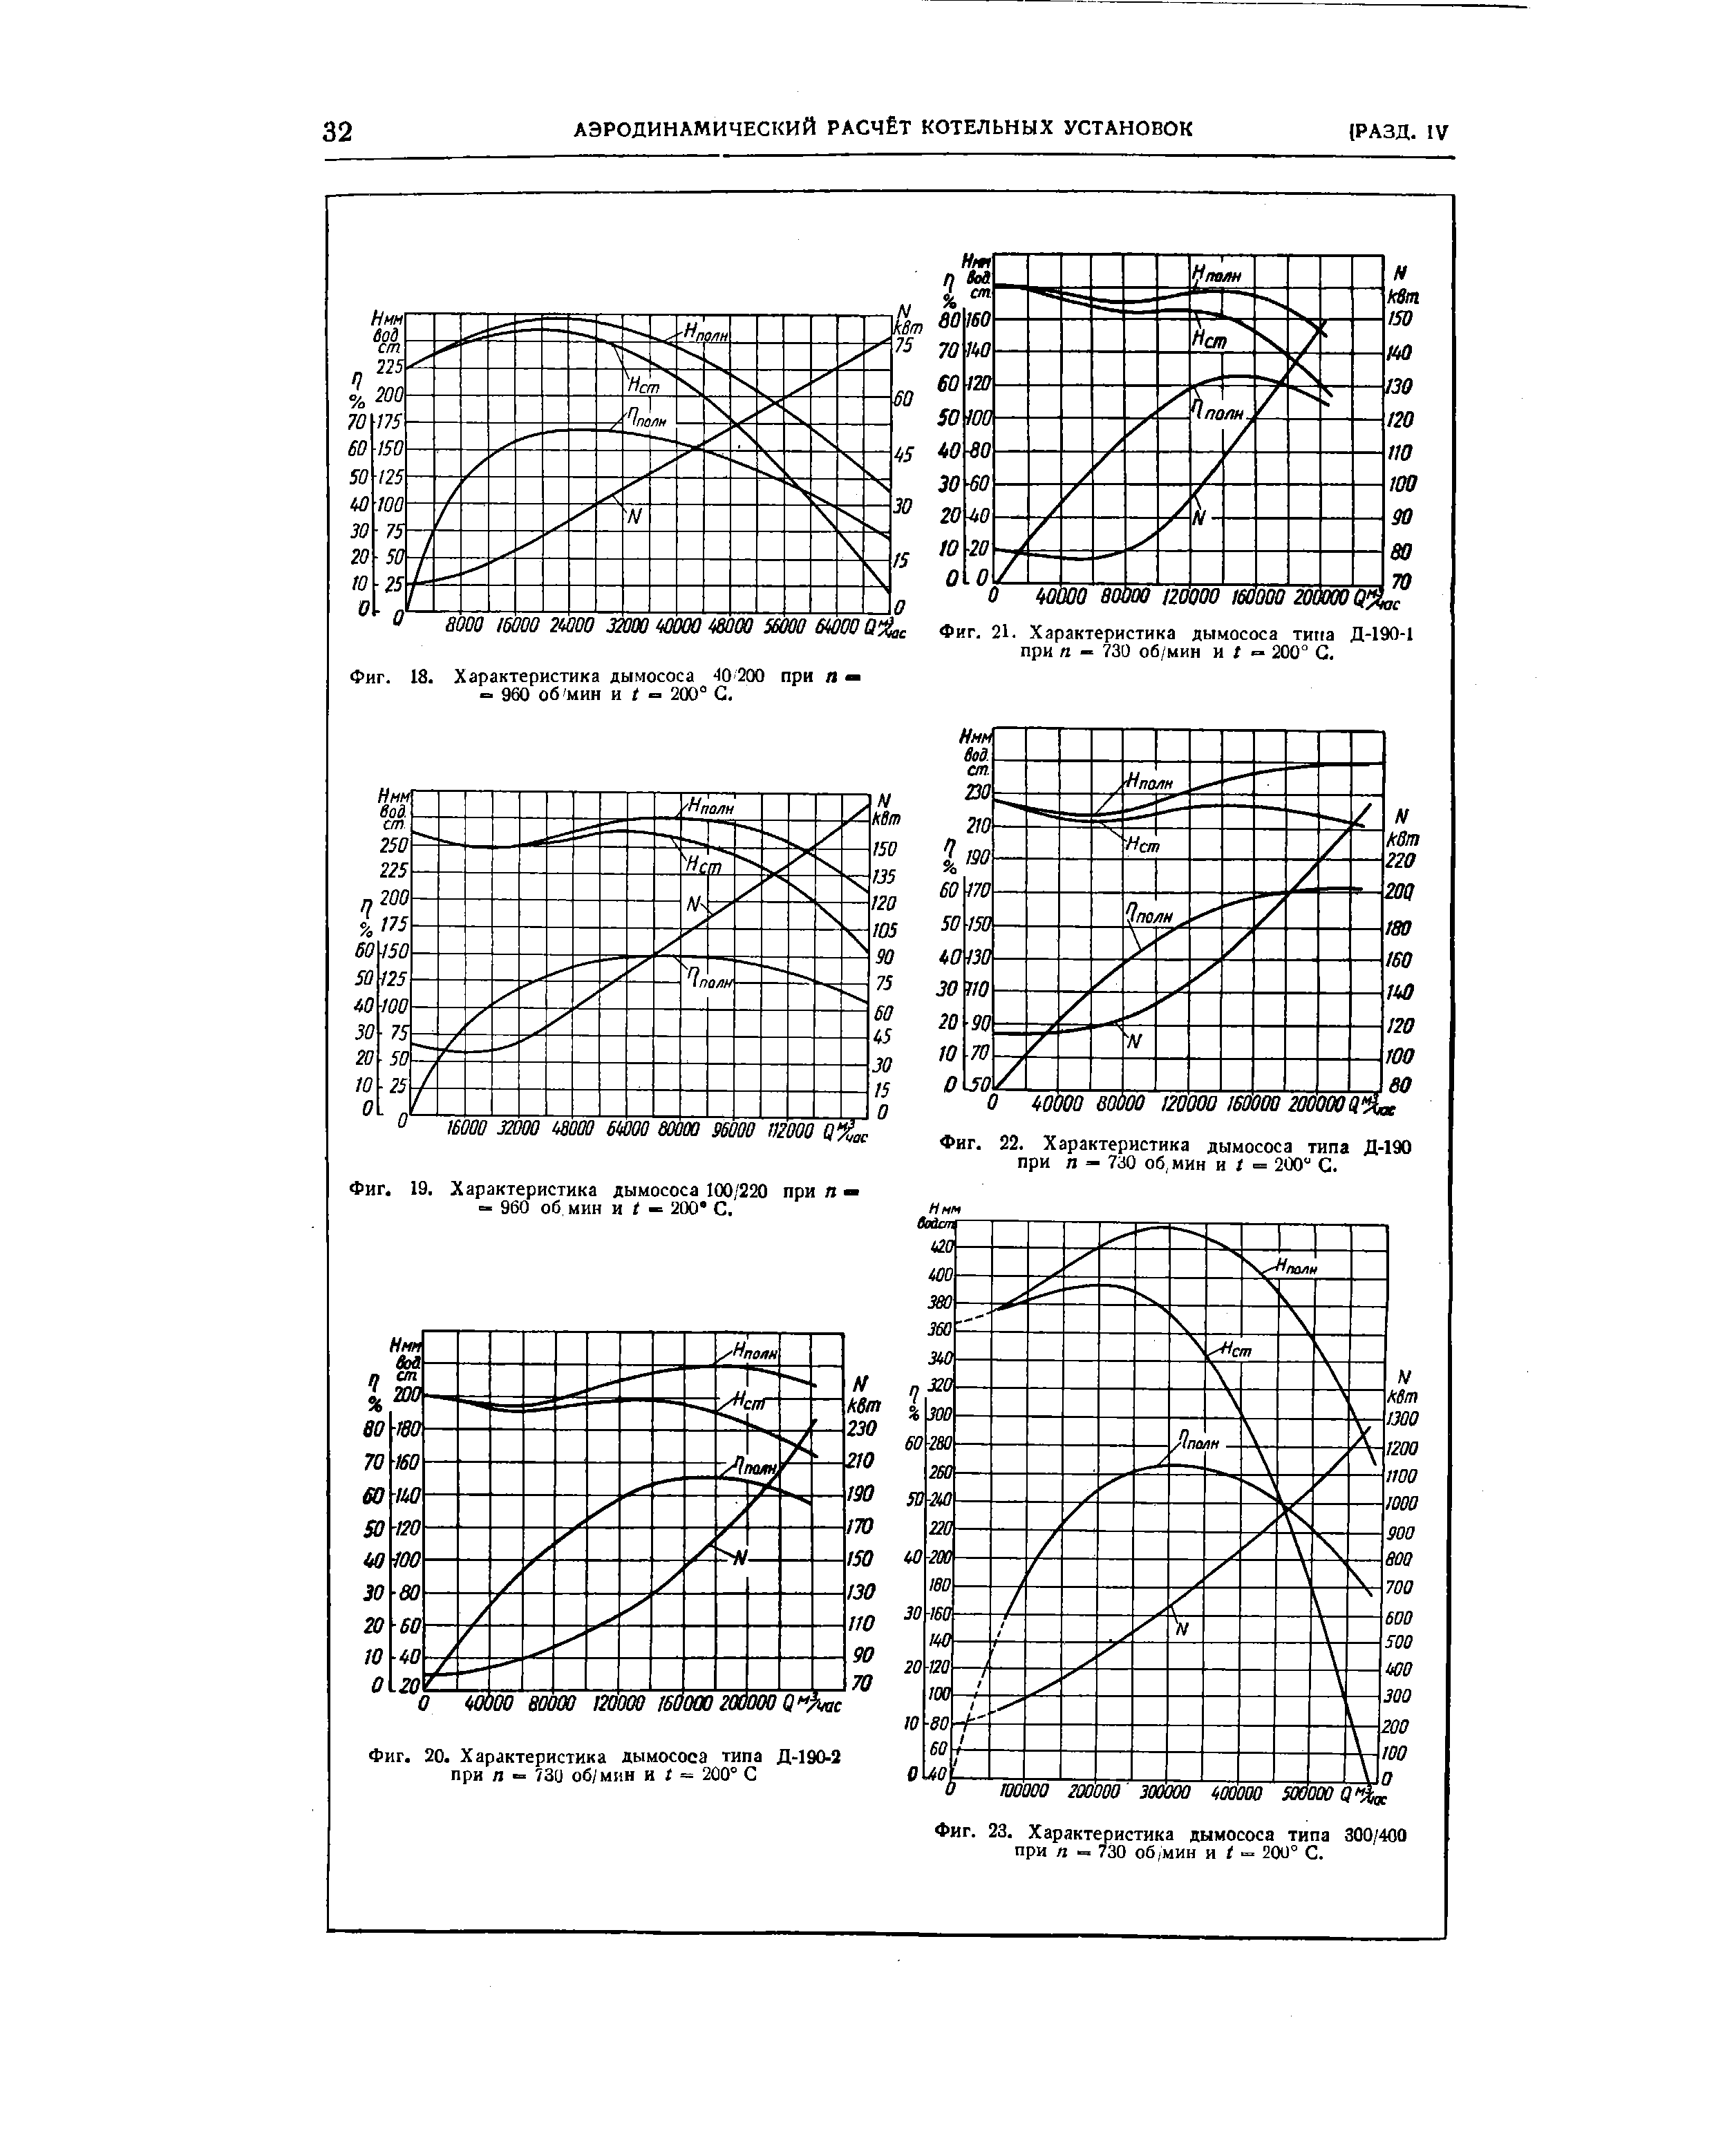 Фиг. 22. Характеристика дымососа типа Д-190 при п — 730 об, мин и / = 200" С.
